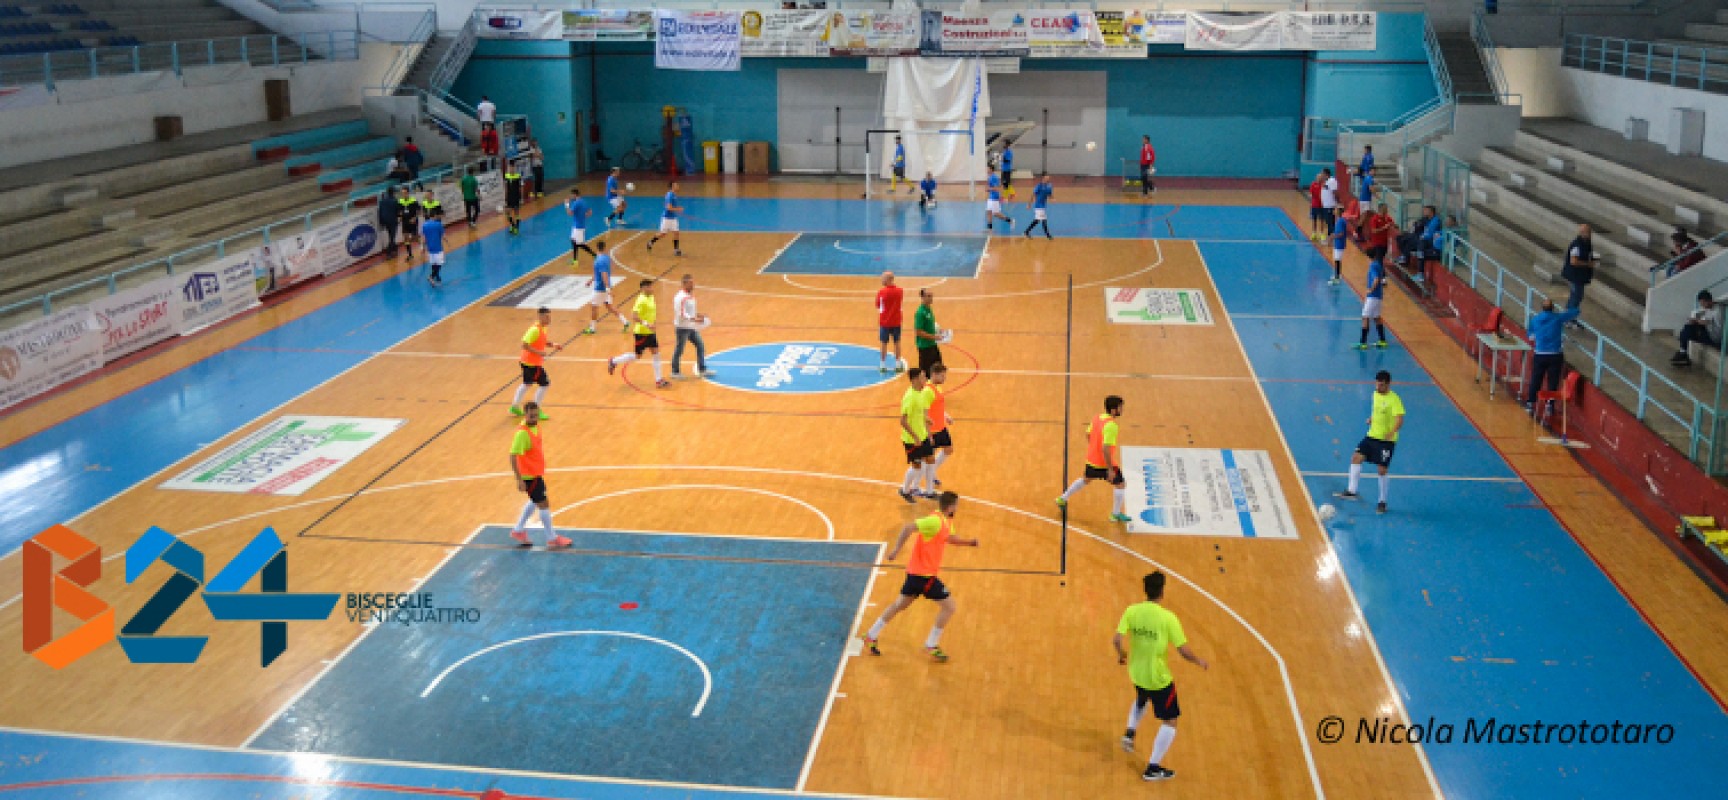 Diretta Live: Futsal Bisceglie-Cisternino 6-6